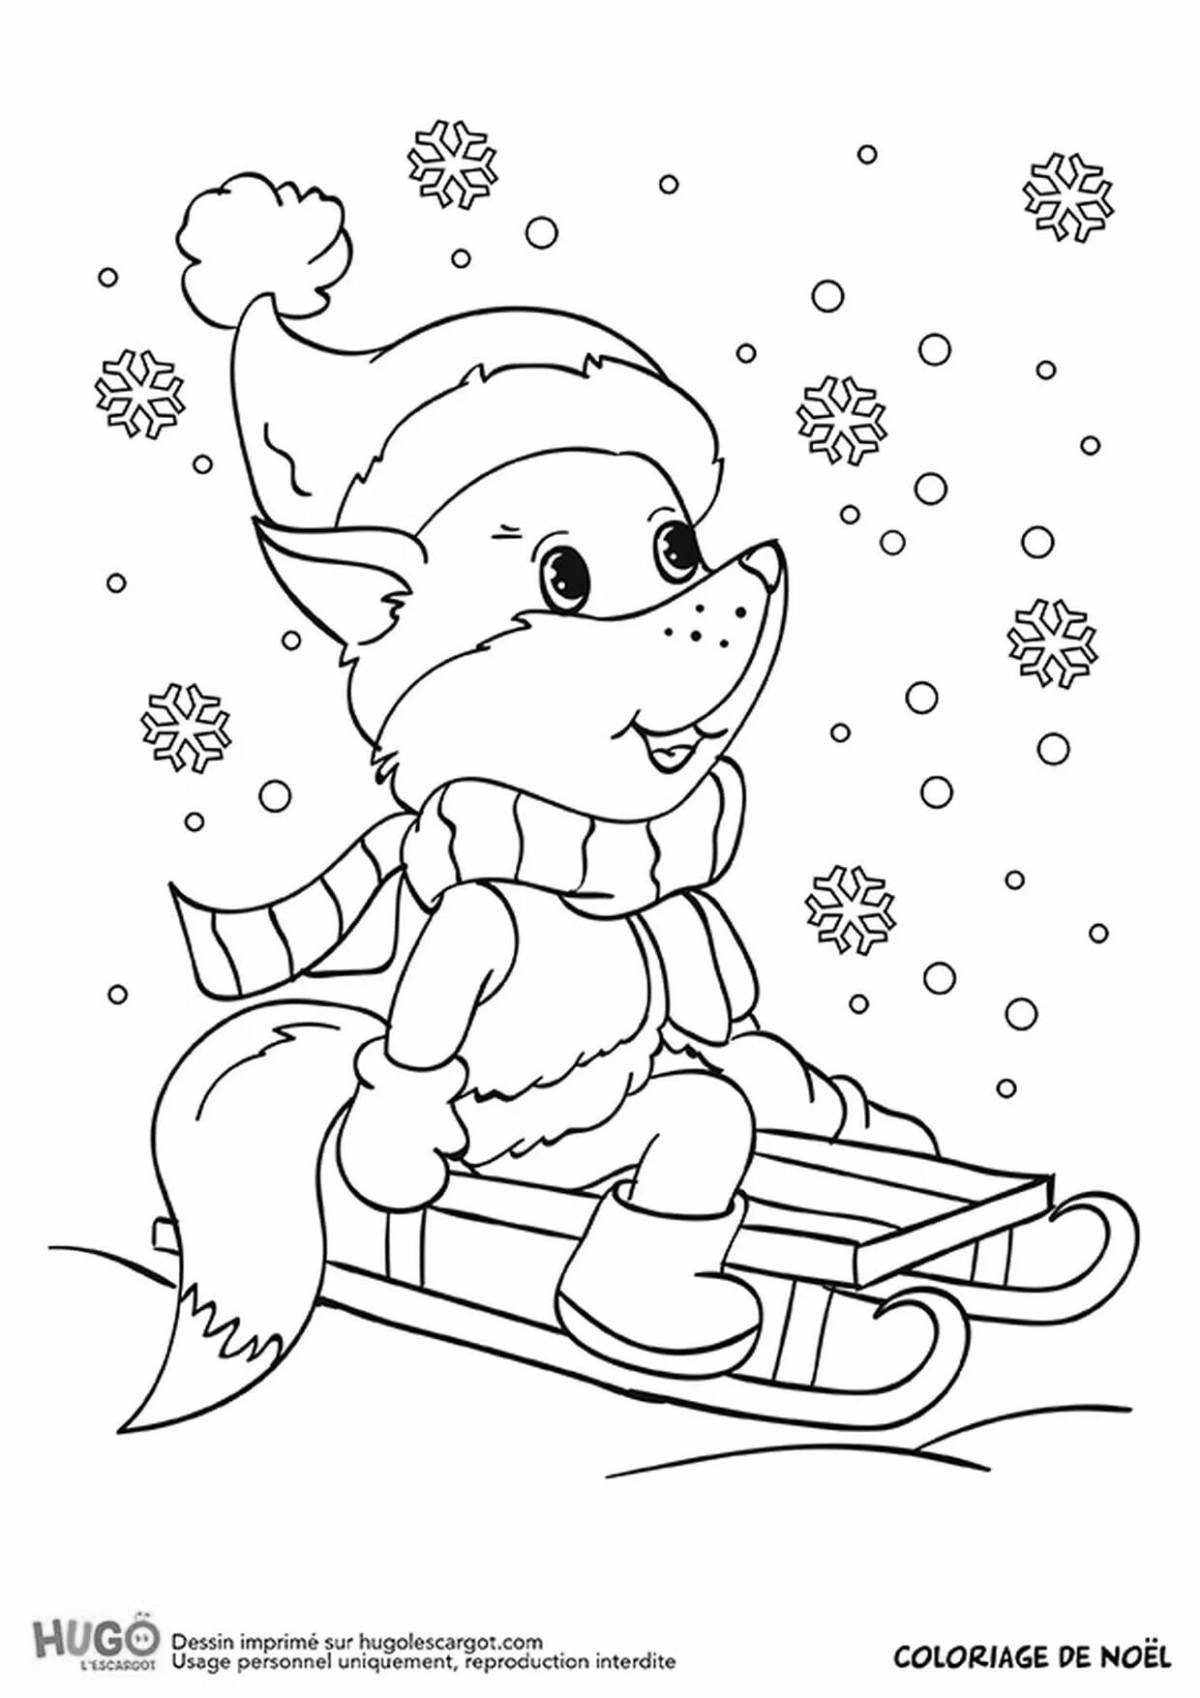 Joyful fox in winter coloring book